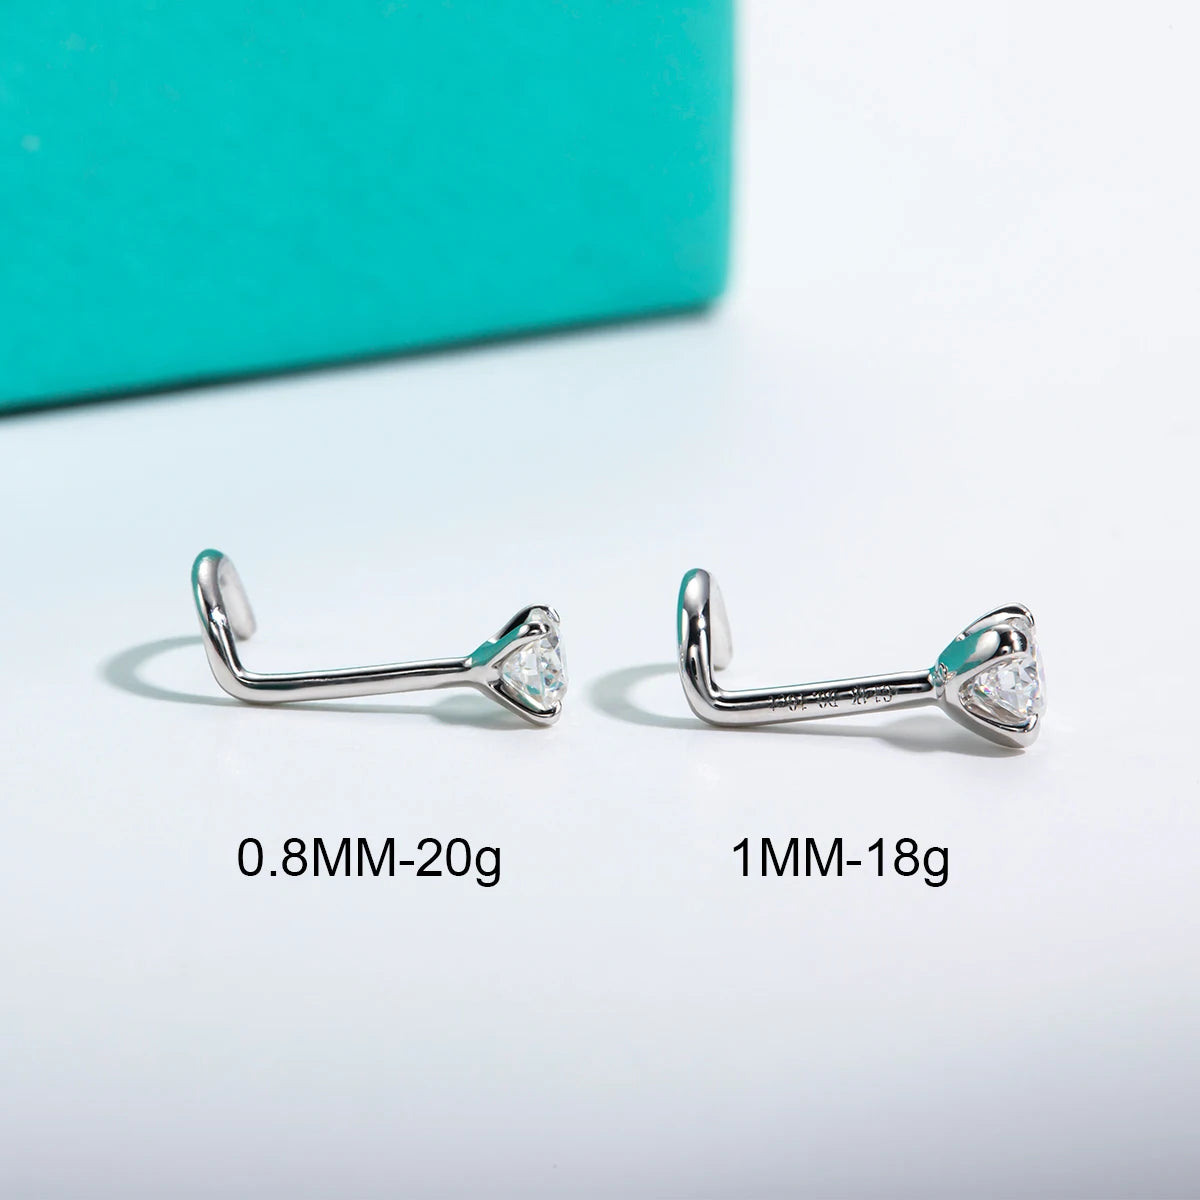 Nose Ring 3mm Moissanite Diamond Pierce Body Jewelry With Certificate Jewelry Making